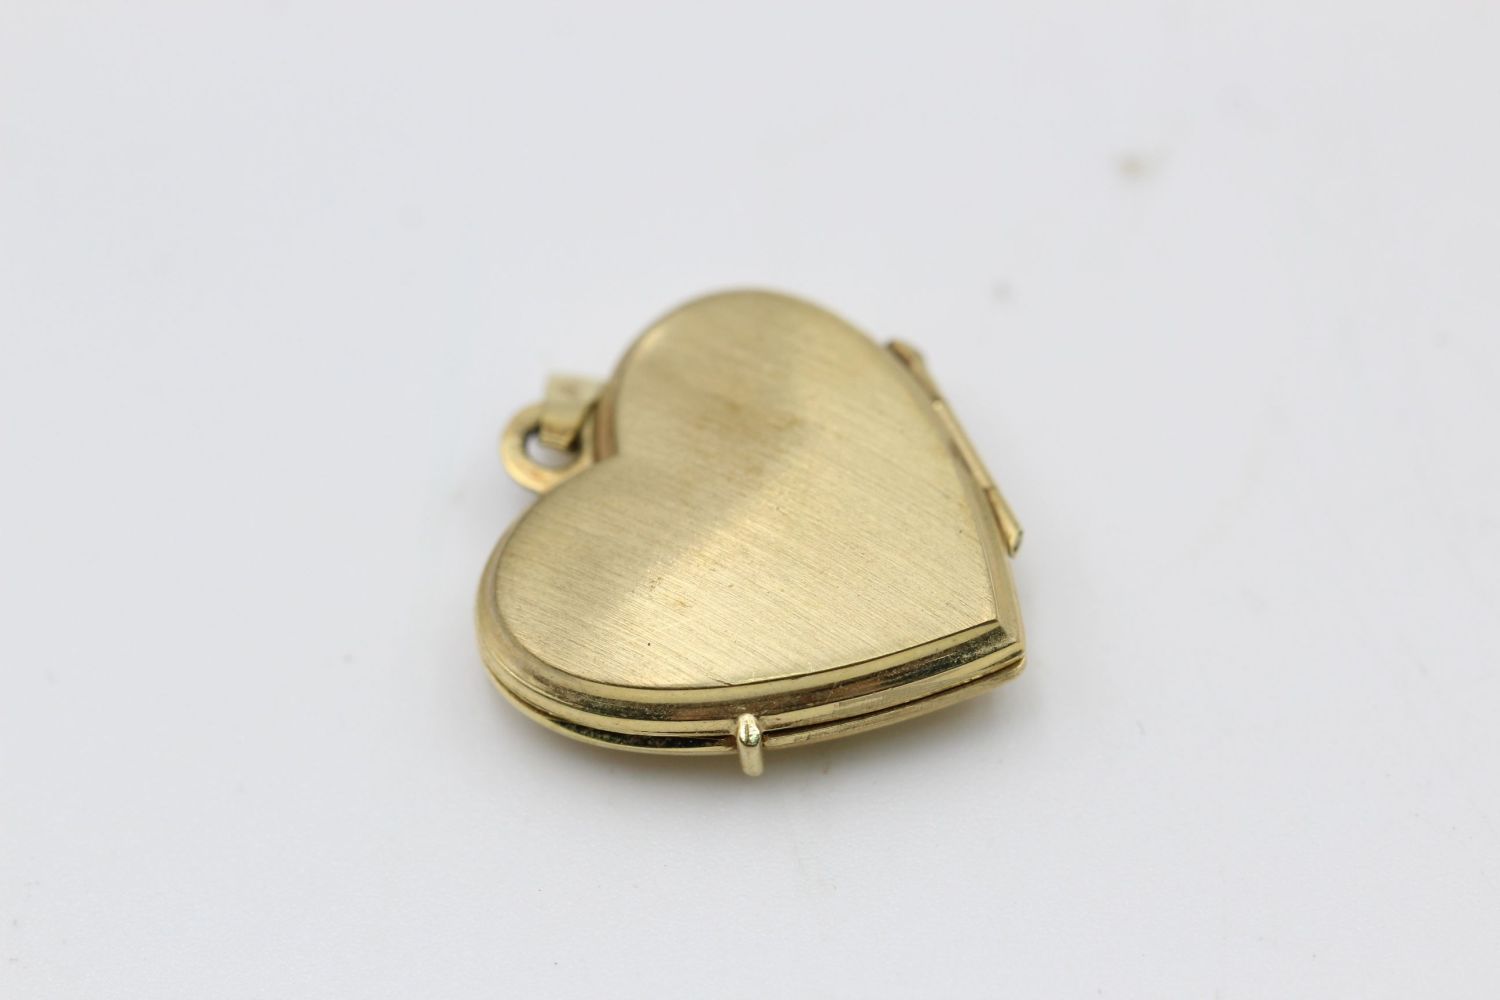 2 x 9ct gold patterned locket pendants 2.7 grams gross - Image 5 of 5